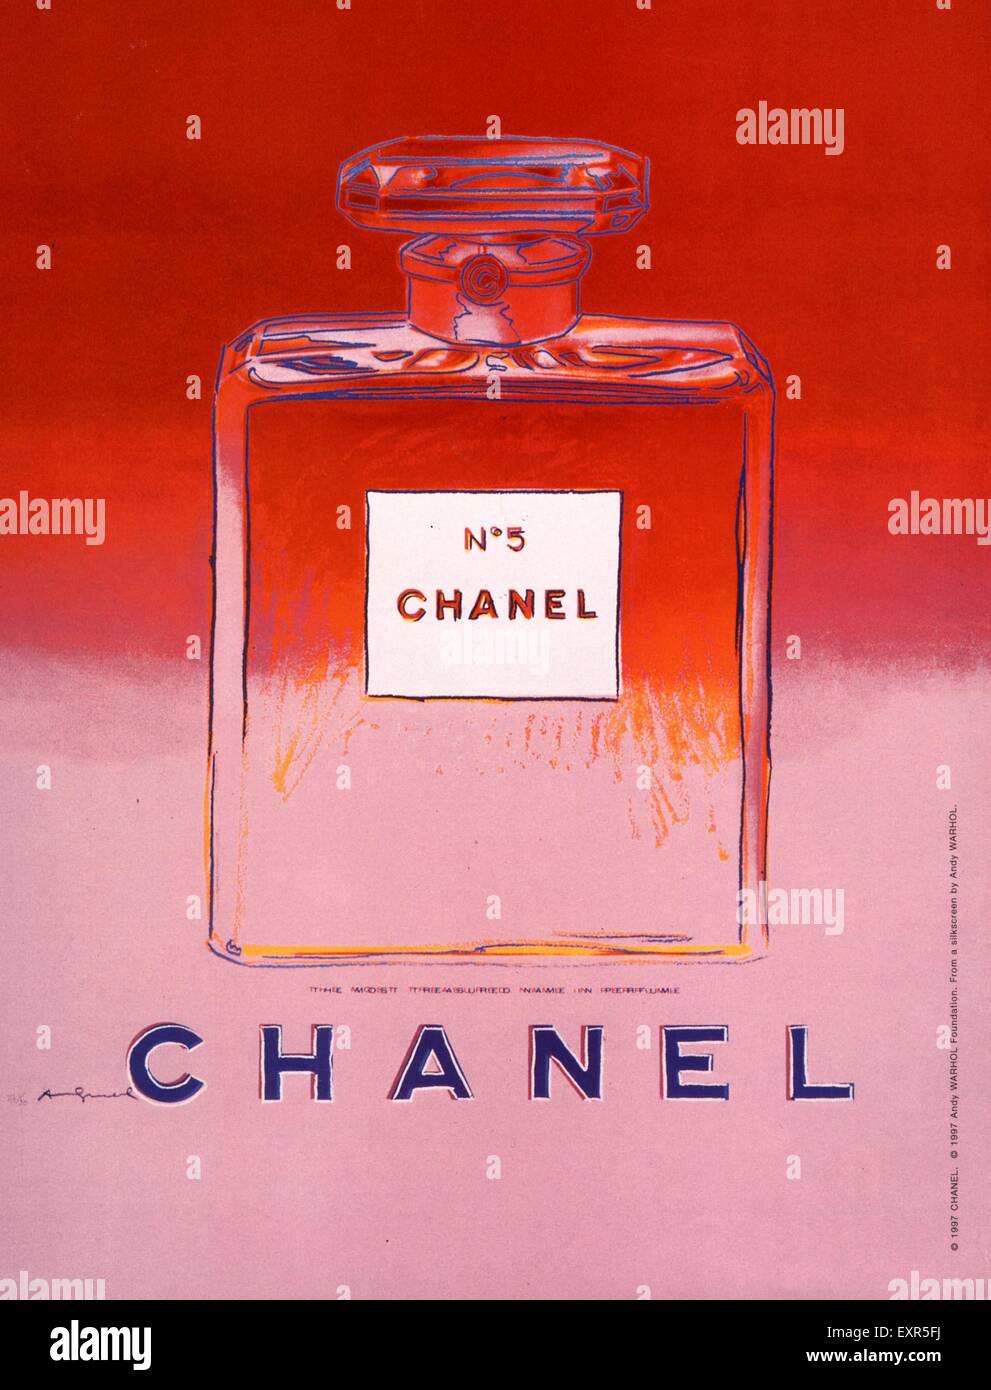 1990s UK Chanel Magazine Advert Stock Photo